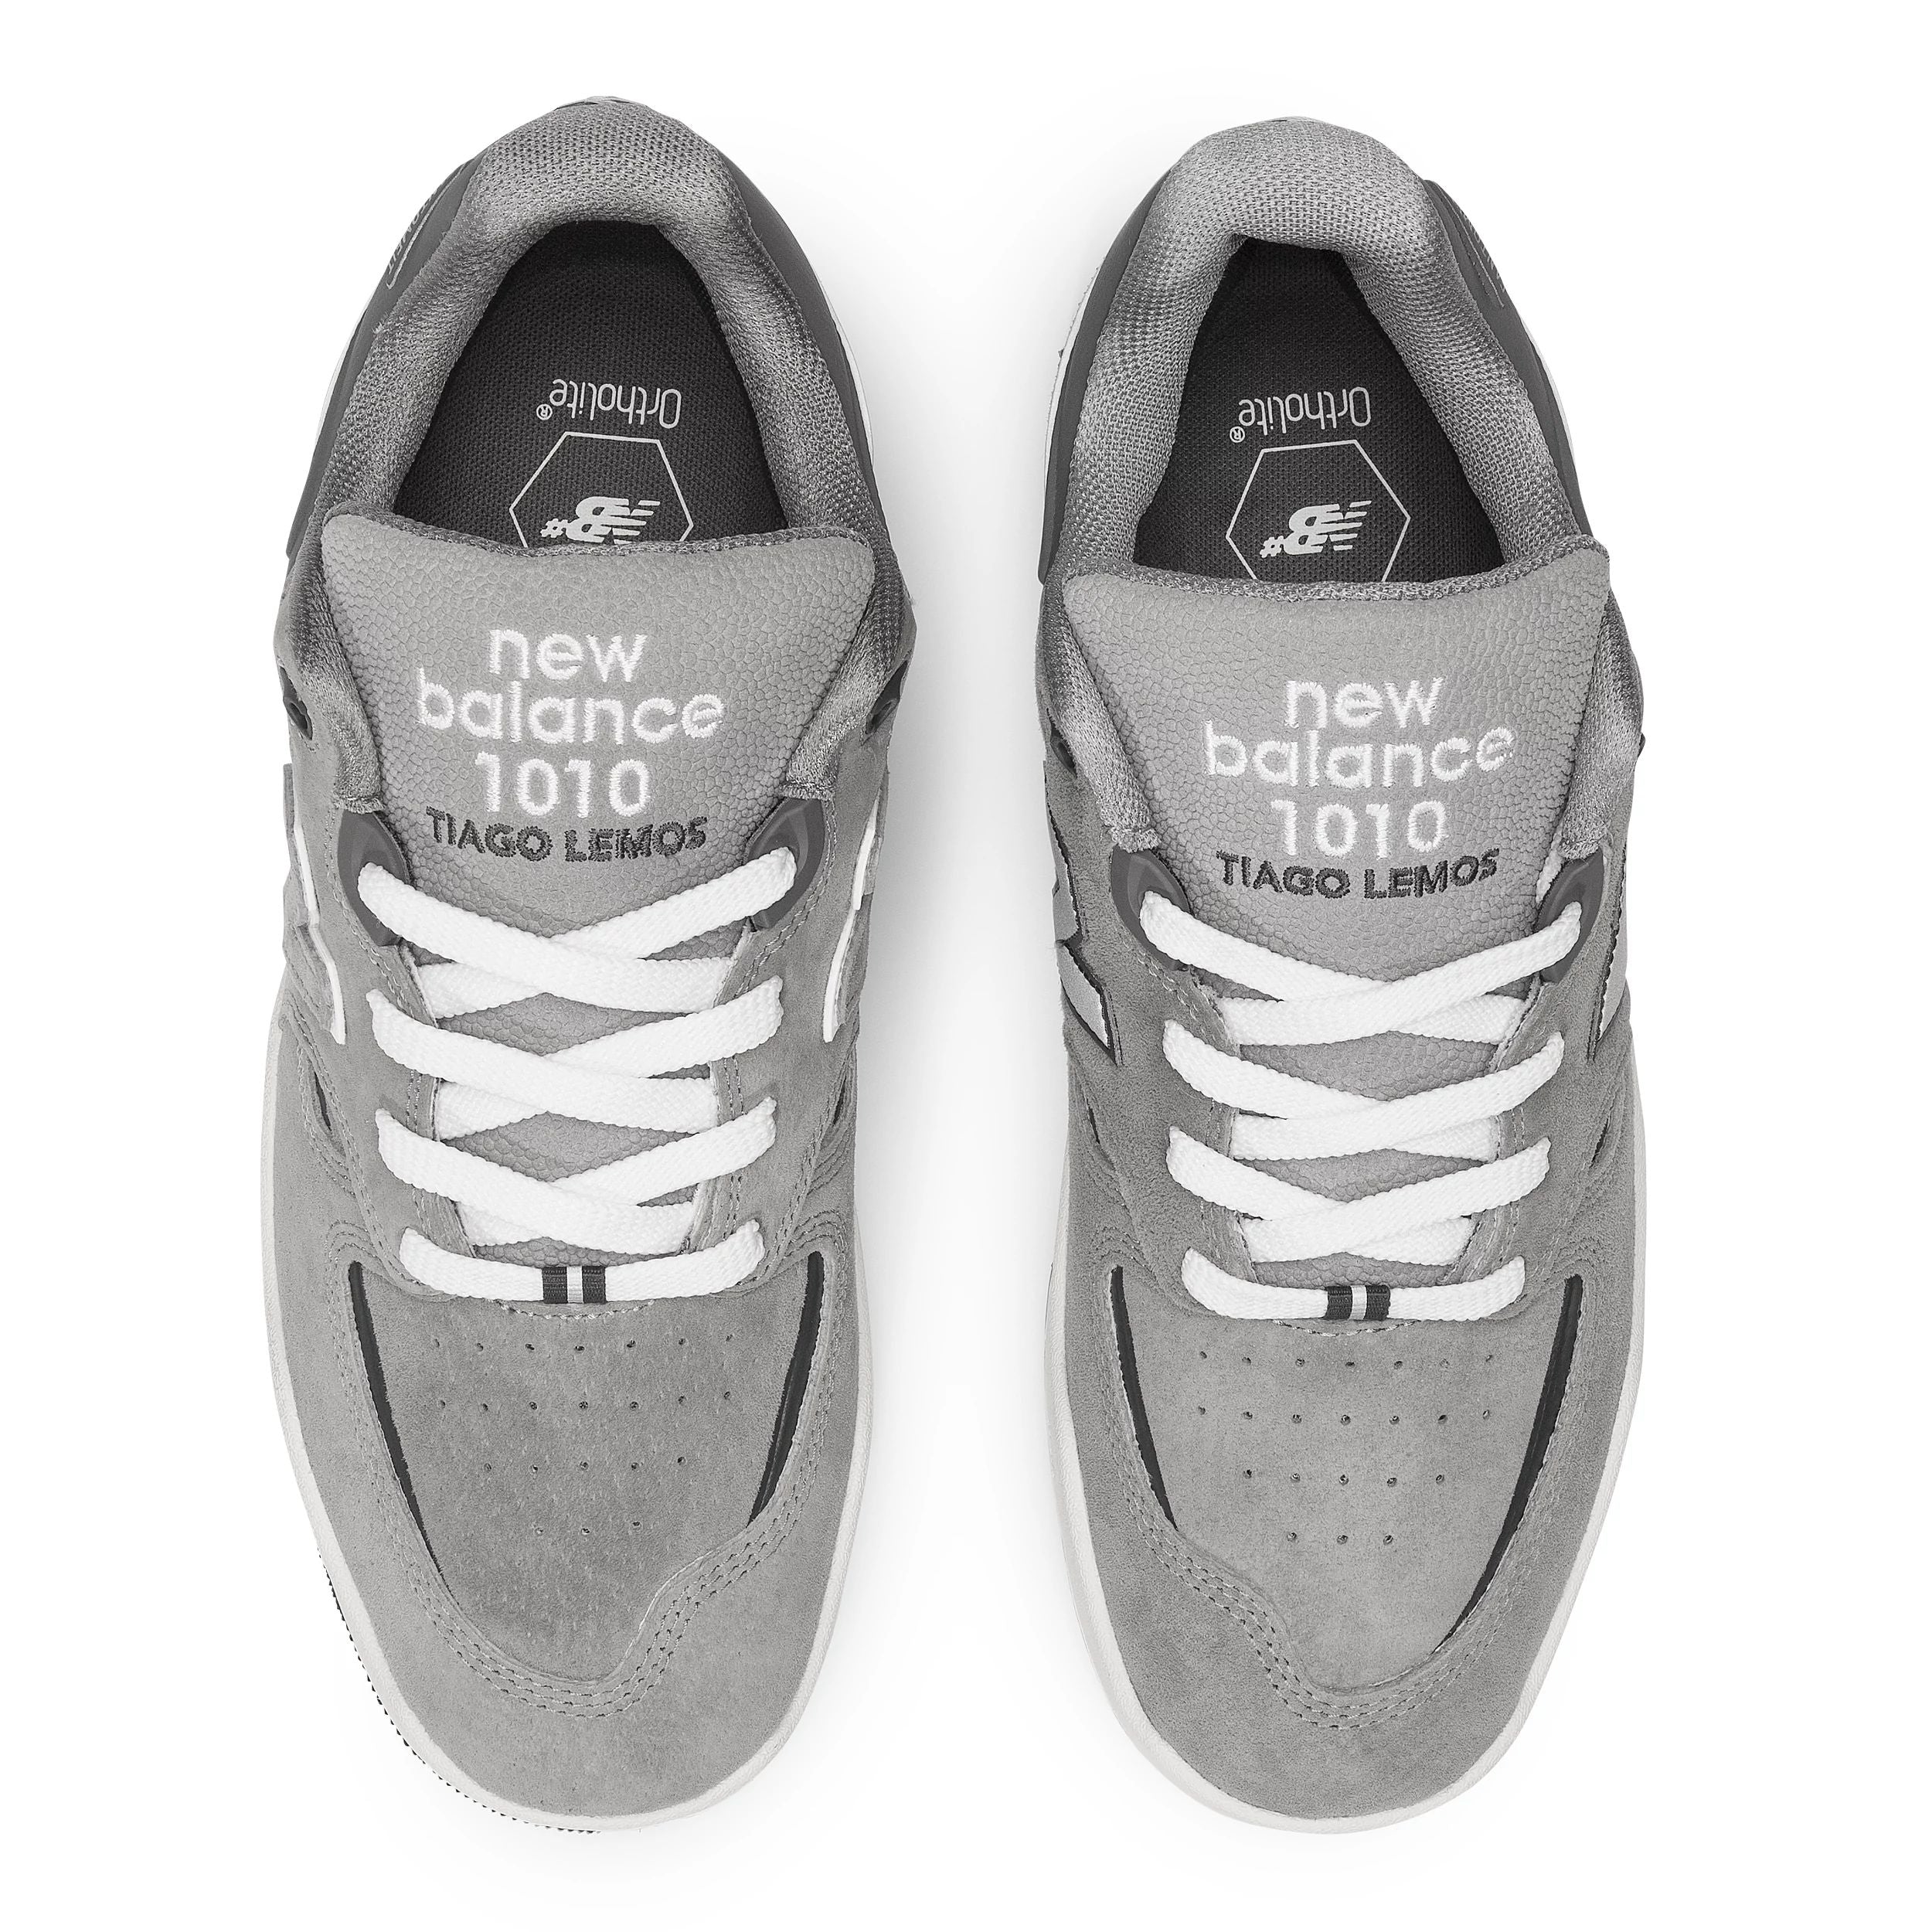 New Balance Numeric 1010 Tiago Lemos Skateboard Shoe - Grey